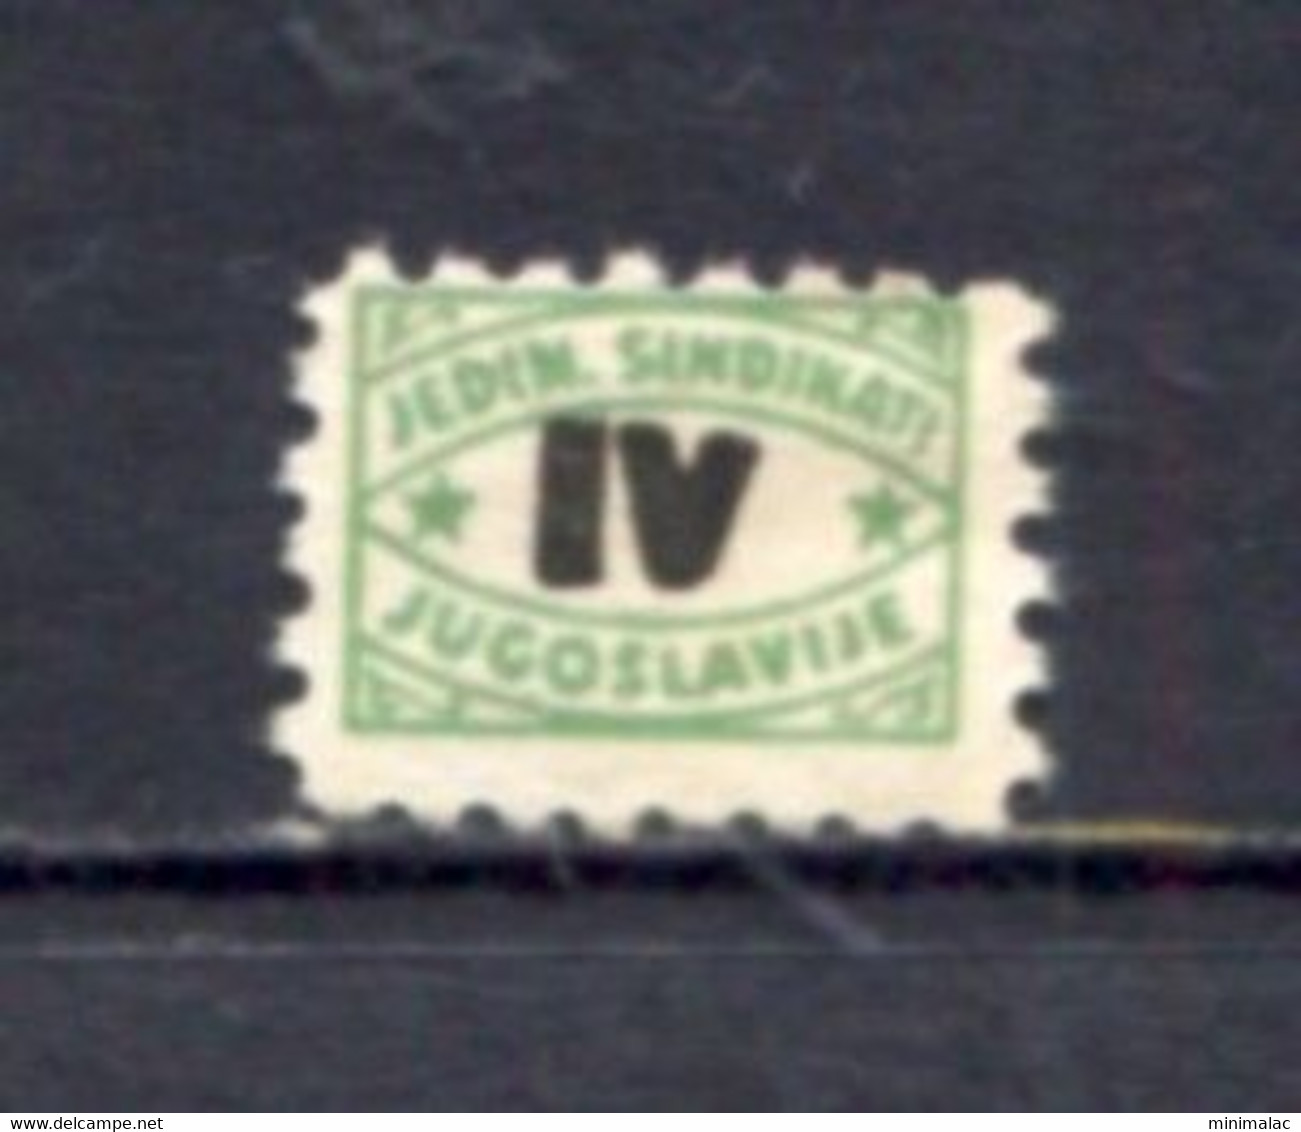 Yugoslavia 1948, Stamp For Membership, Labor Union, Administrative Stamp - Revenue, Tax Stamp, IV , Green, R - Service